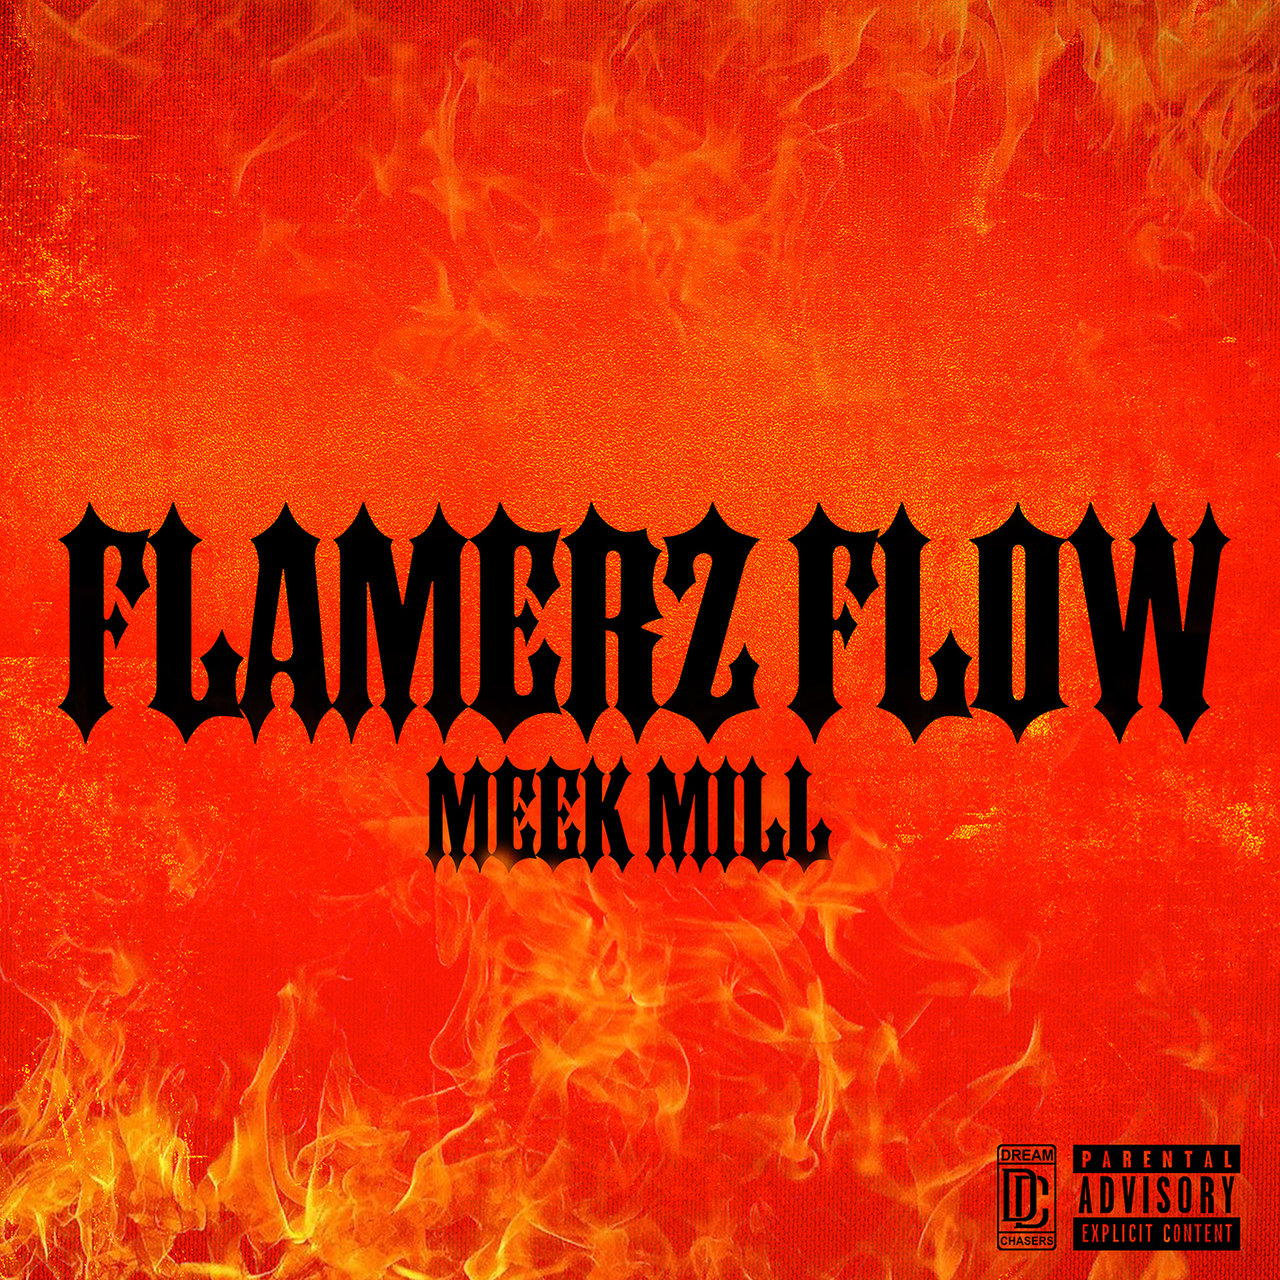 Meek Mill - Flamerz Flow (Cover)